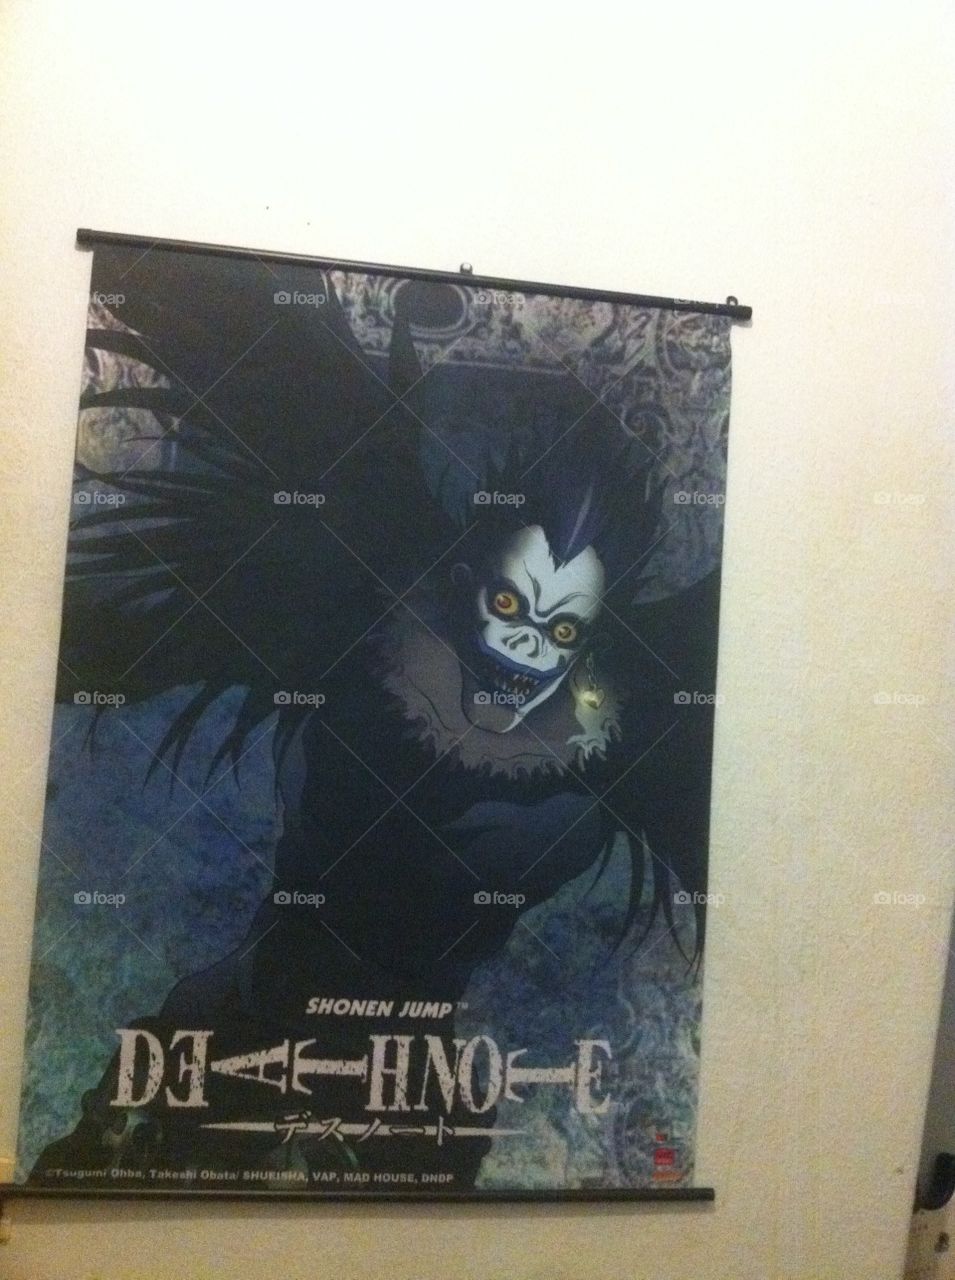 Death Note Wallscroll. The Wall-scroll in my room